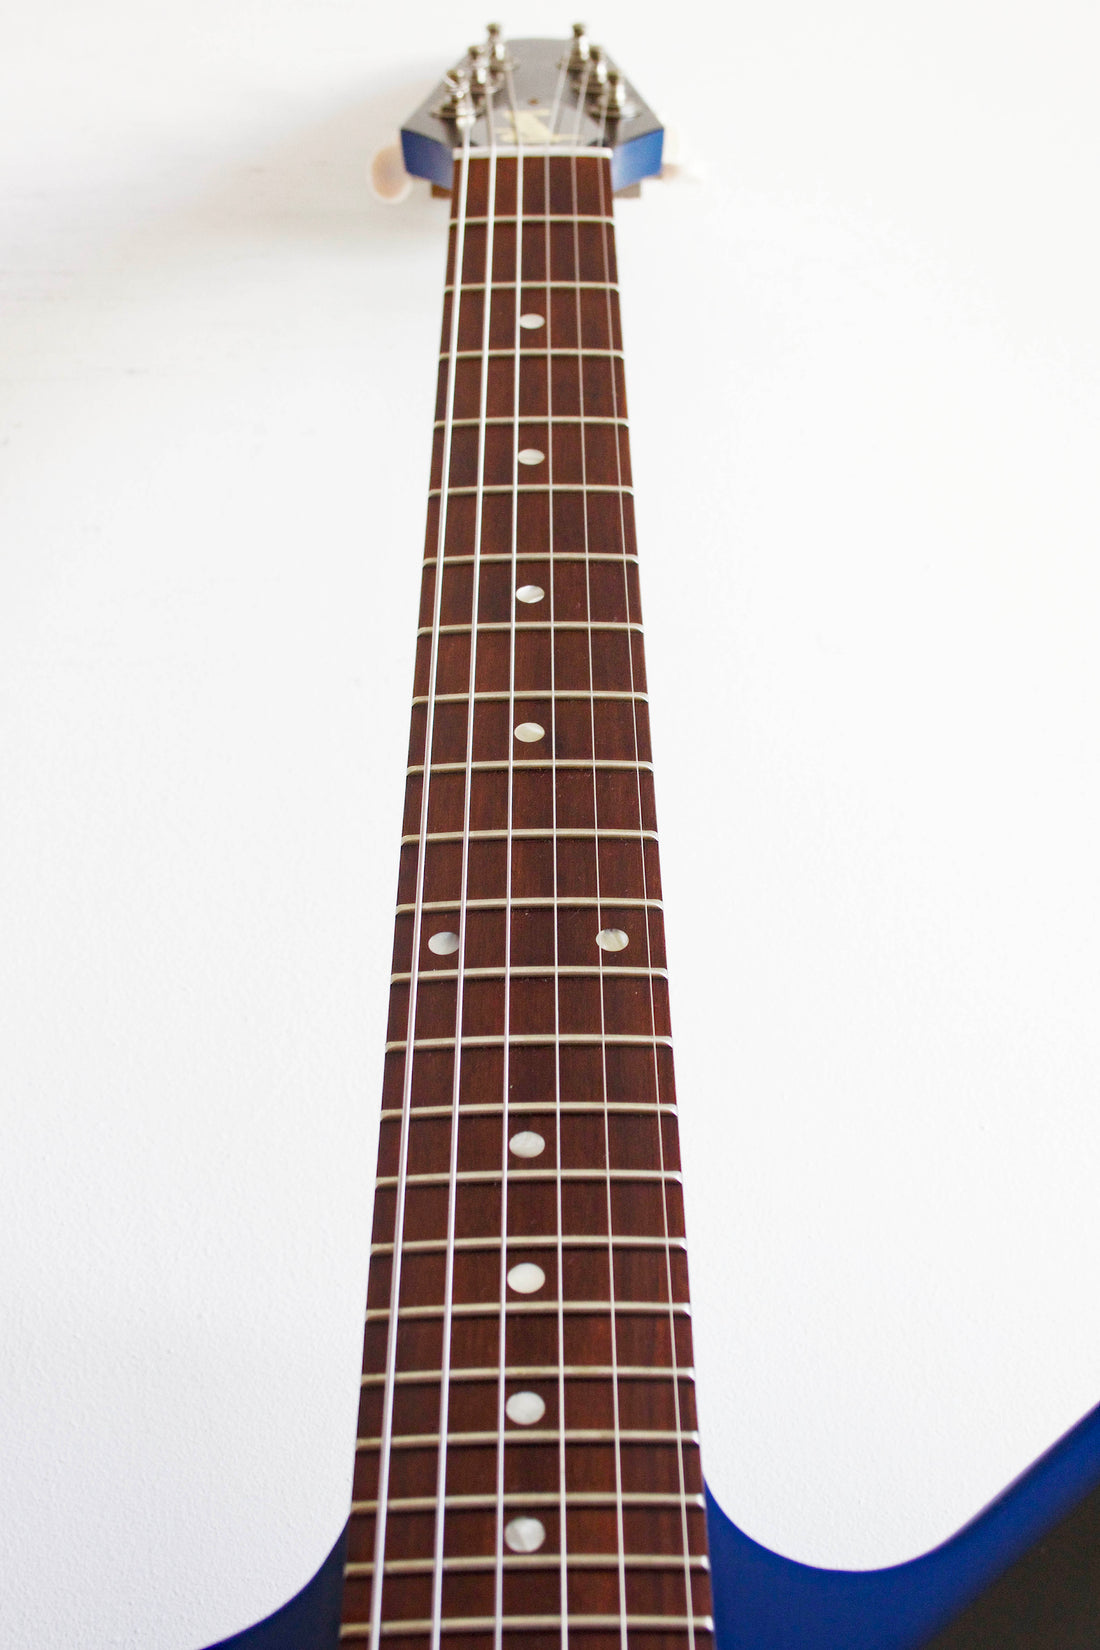 Gibson Melody Maker Explorer Satin Blue 2011